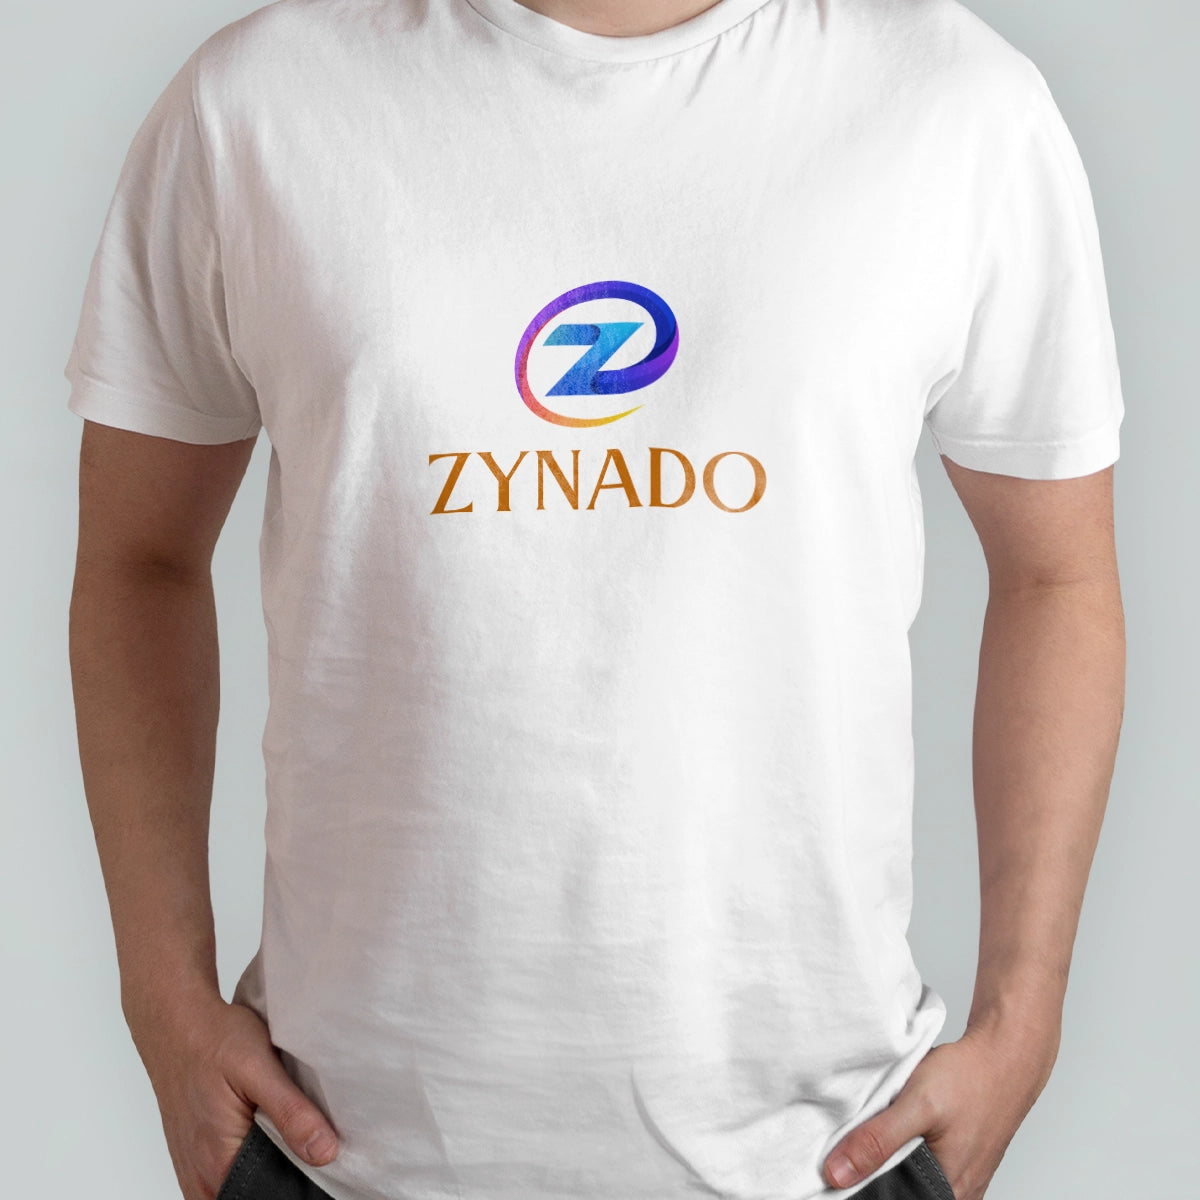 zynado.com